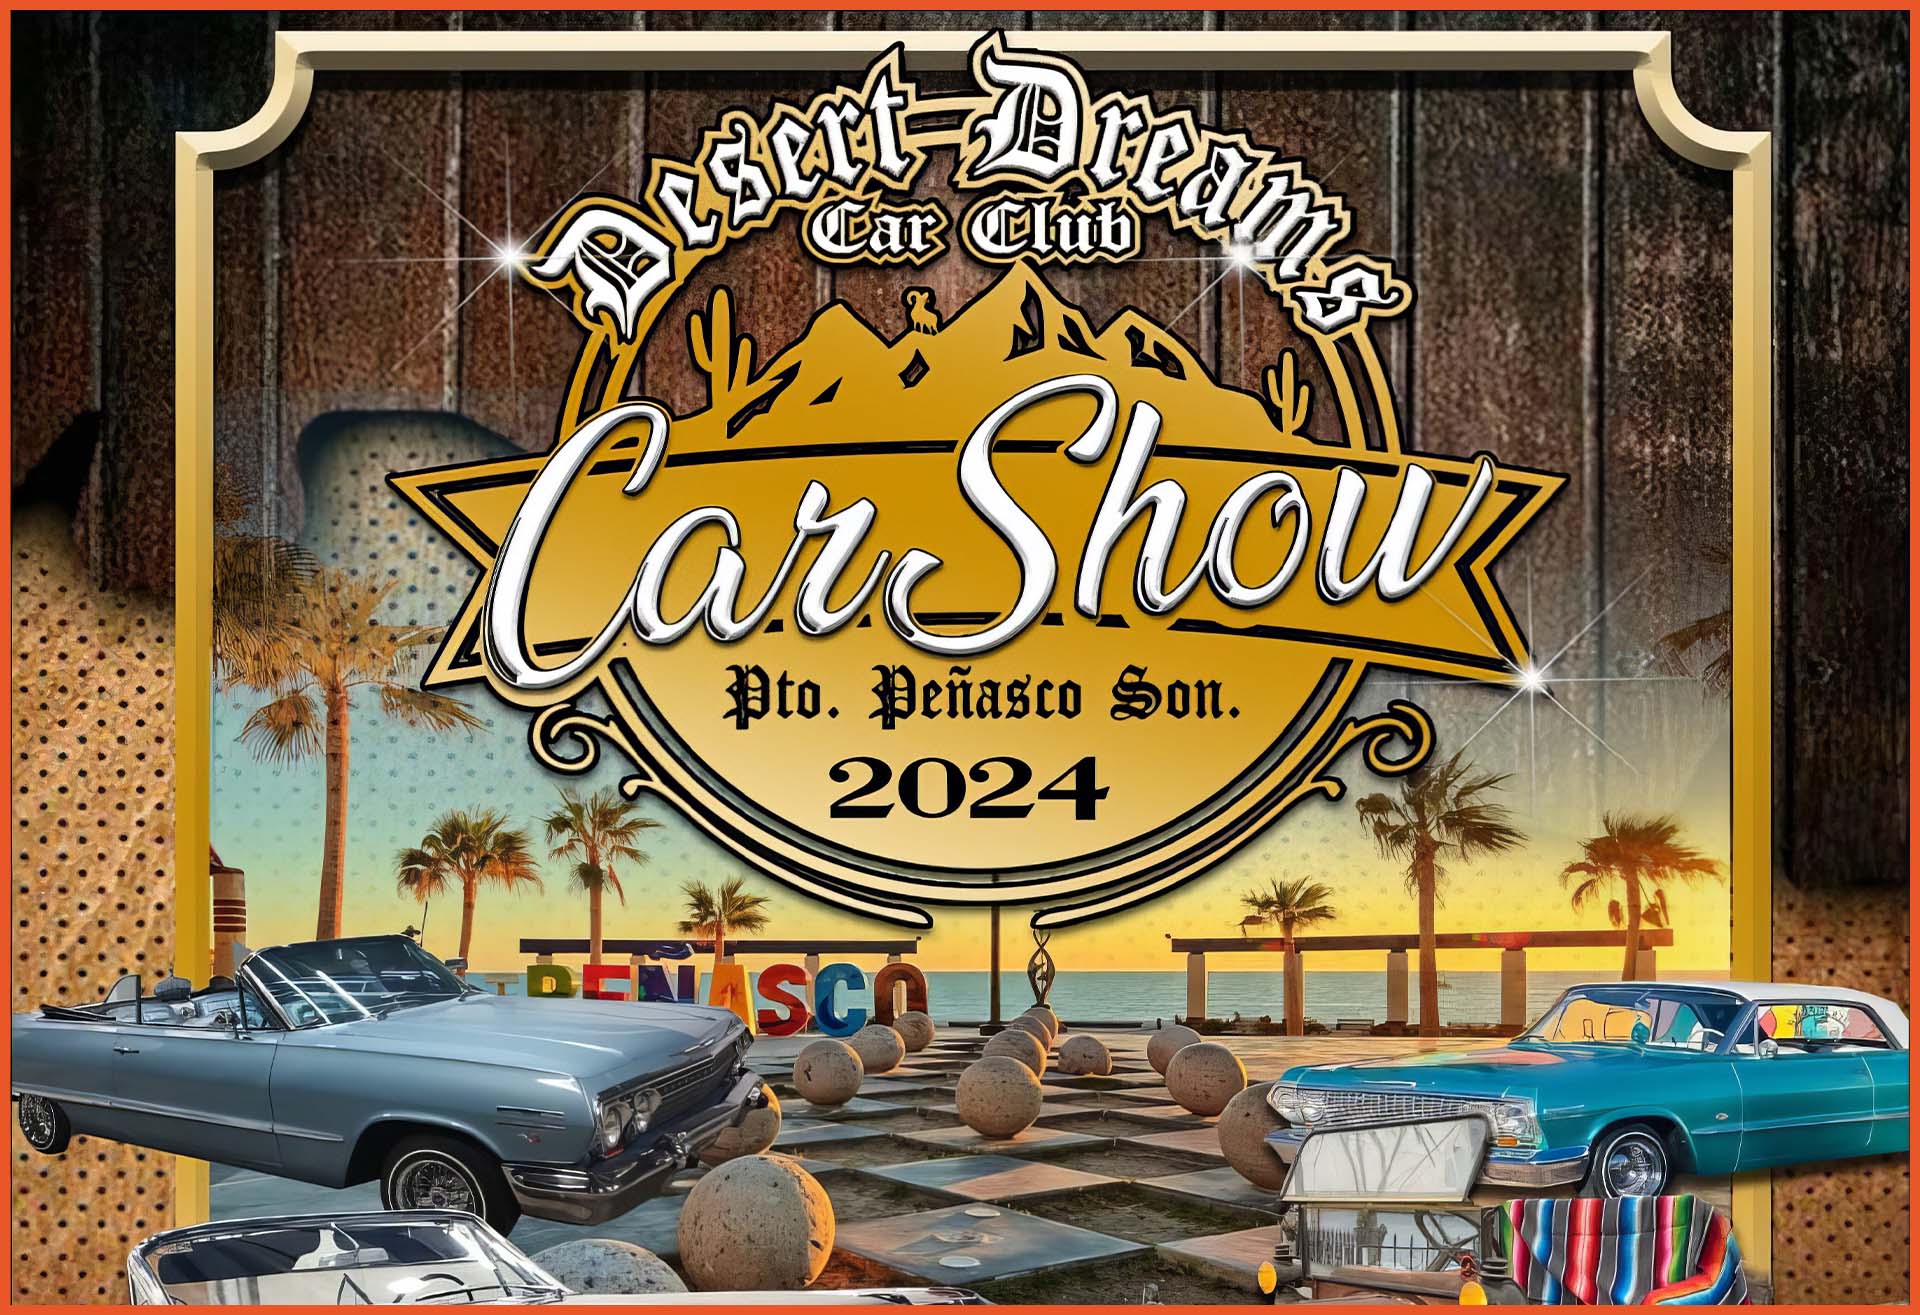 Desert Dreams Car Show 2024, Sonoran Spa Puerto Peñasco, Rocky Point Mexico Arizona USA